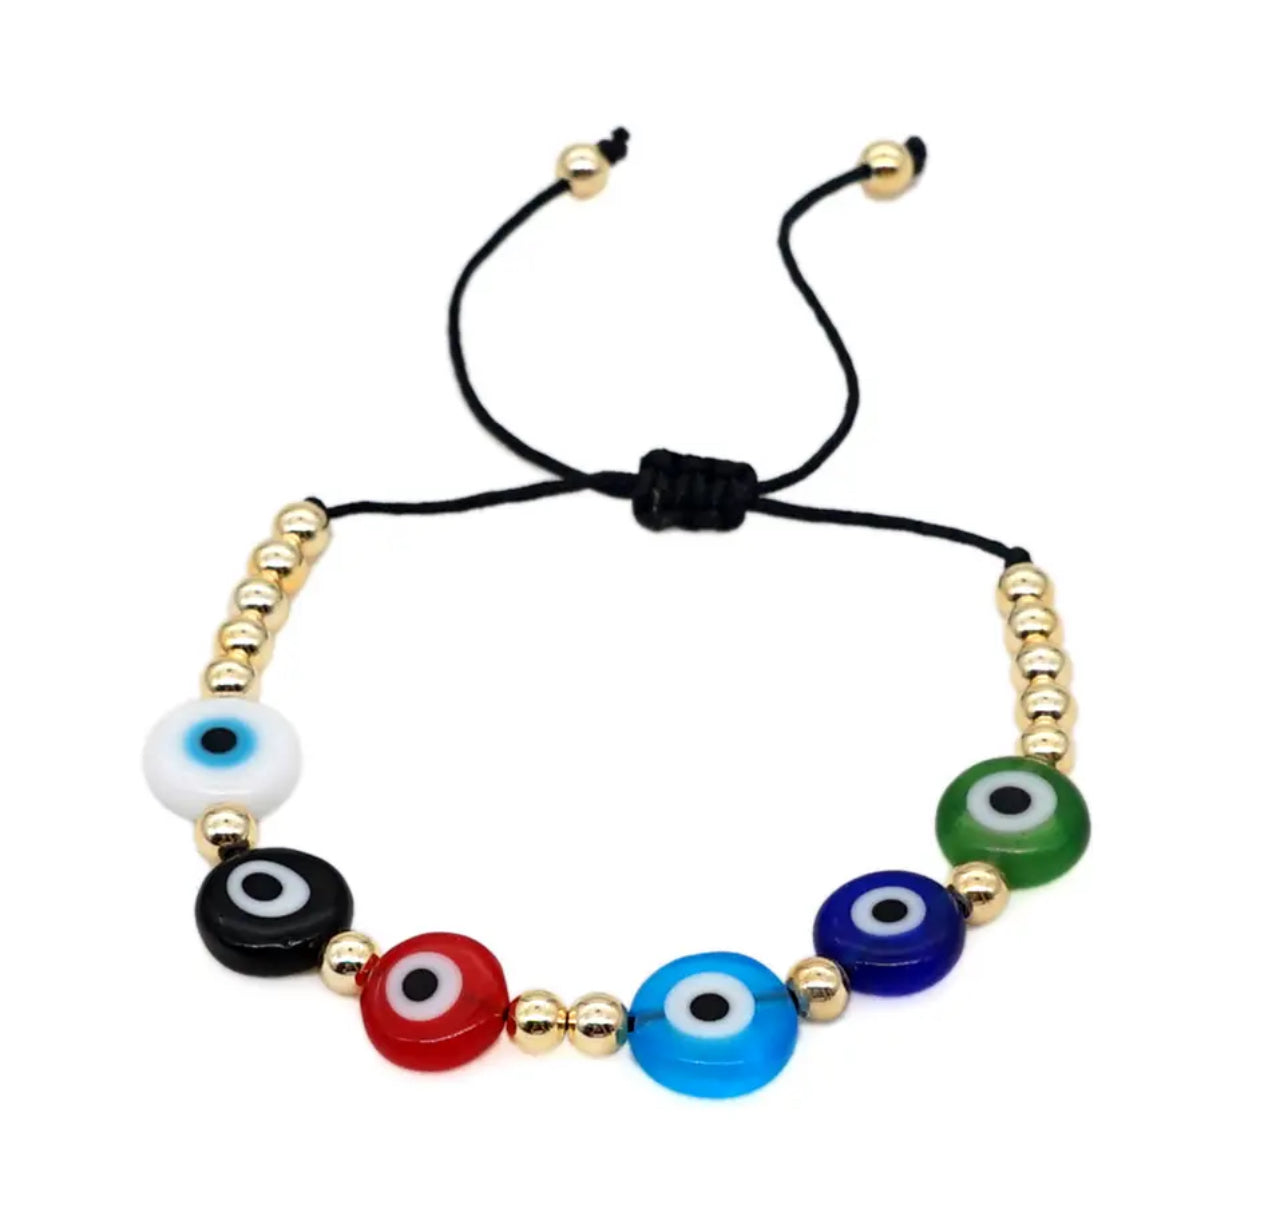 Bracelet Evil Eye beads multicolor with gold